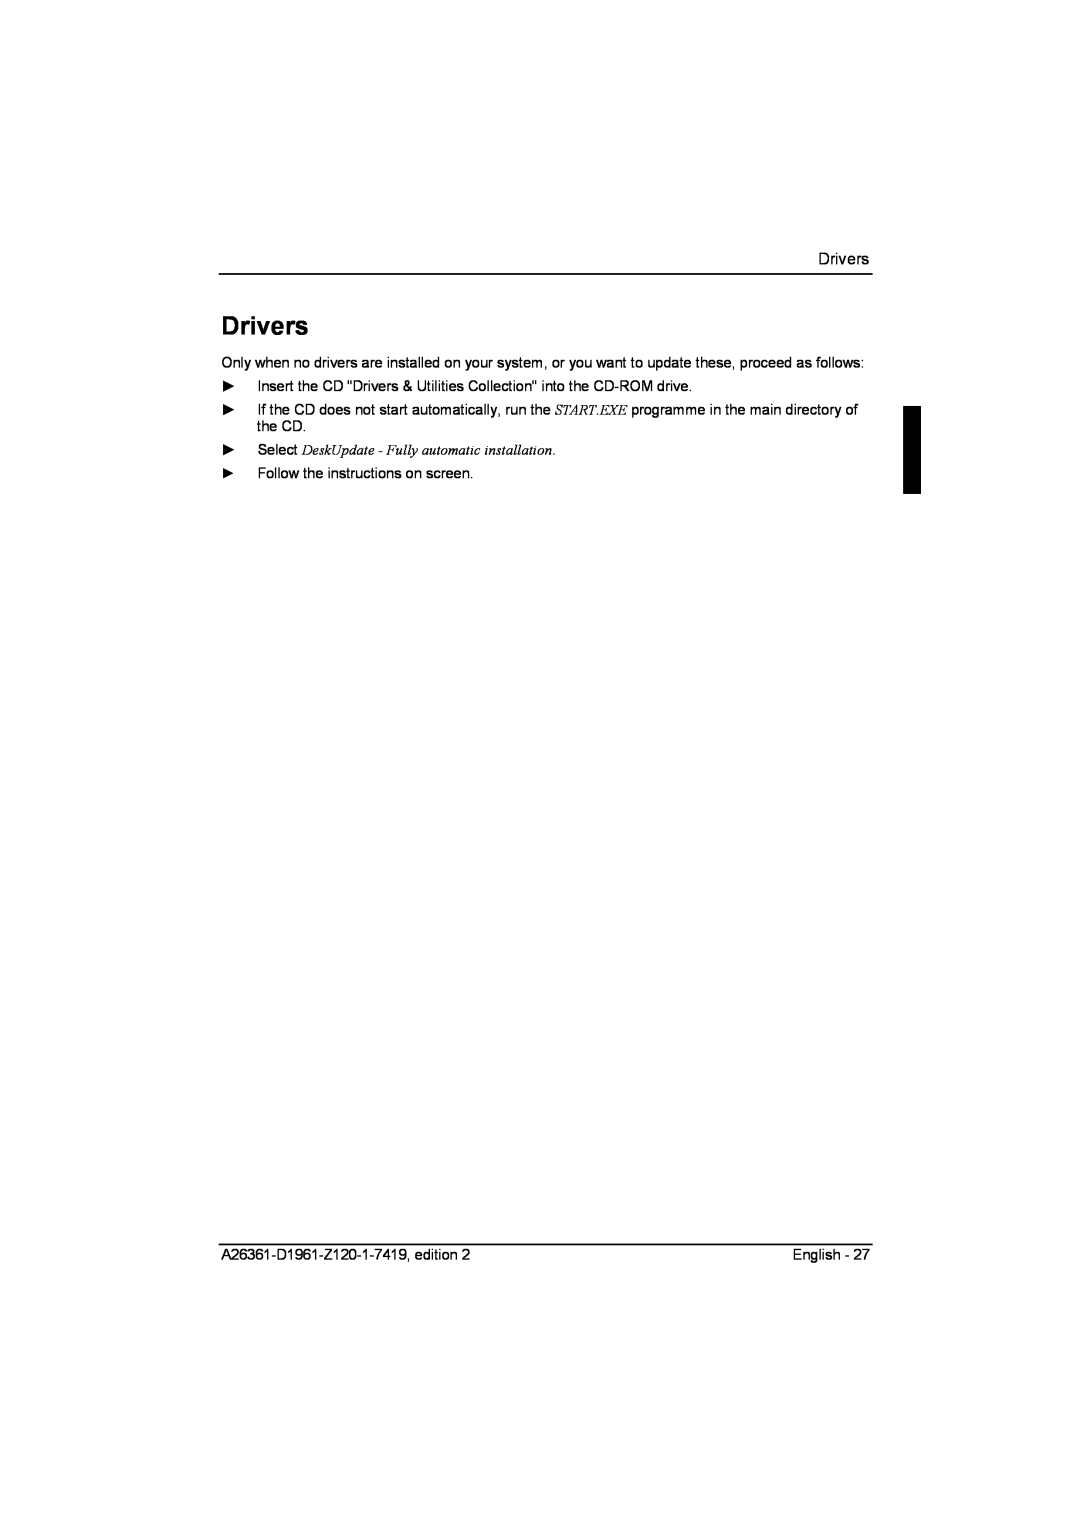 Fujitsu D1961 technical manual Drivers, Select DeskUpdate - Fully automatic installation 